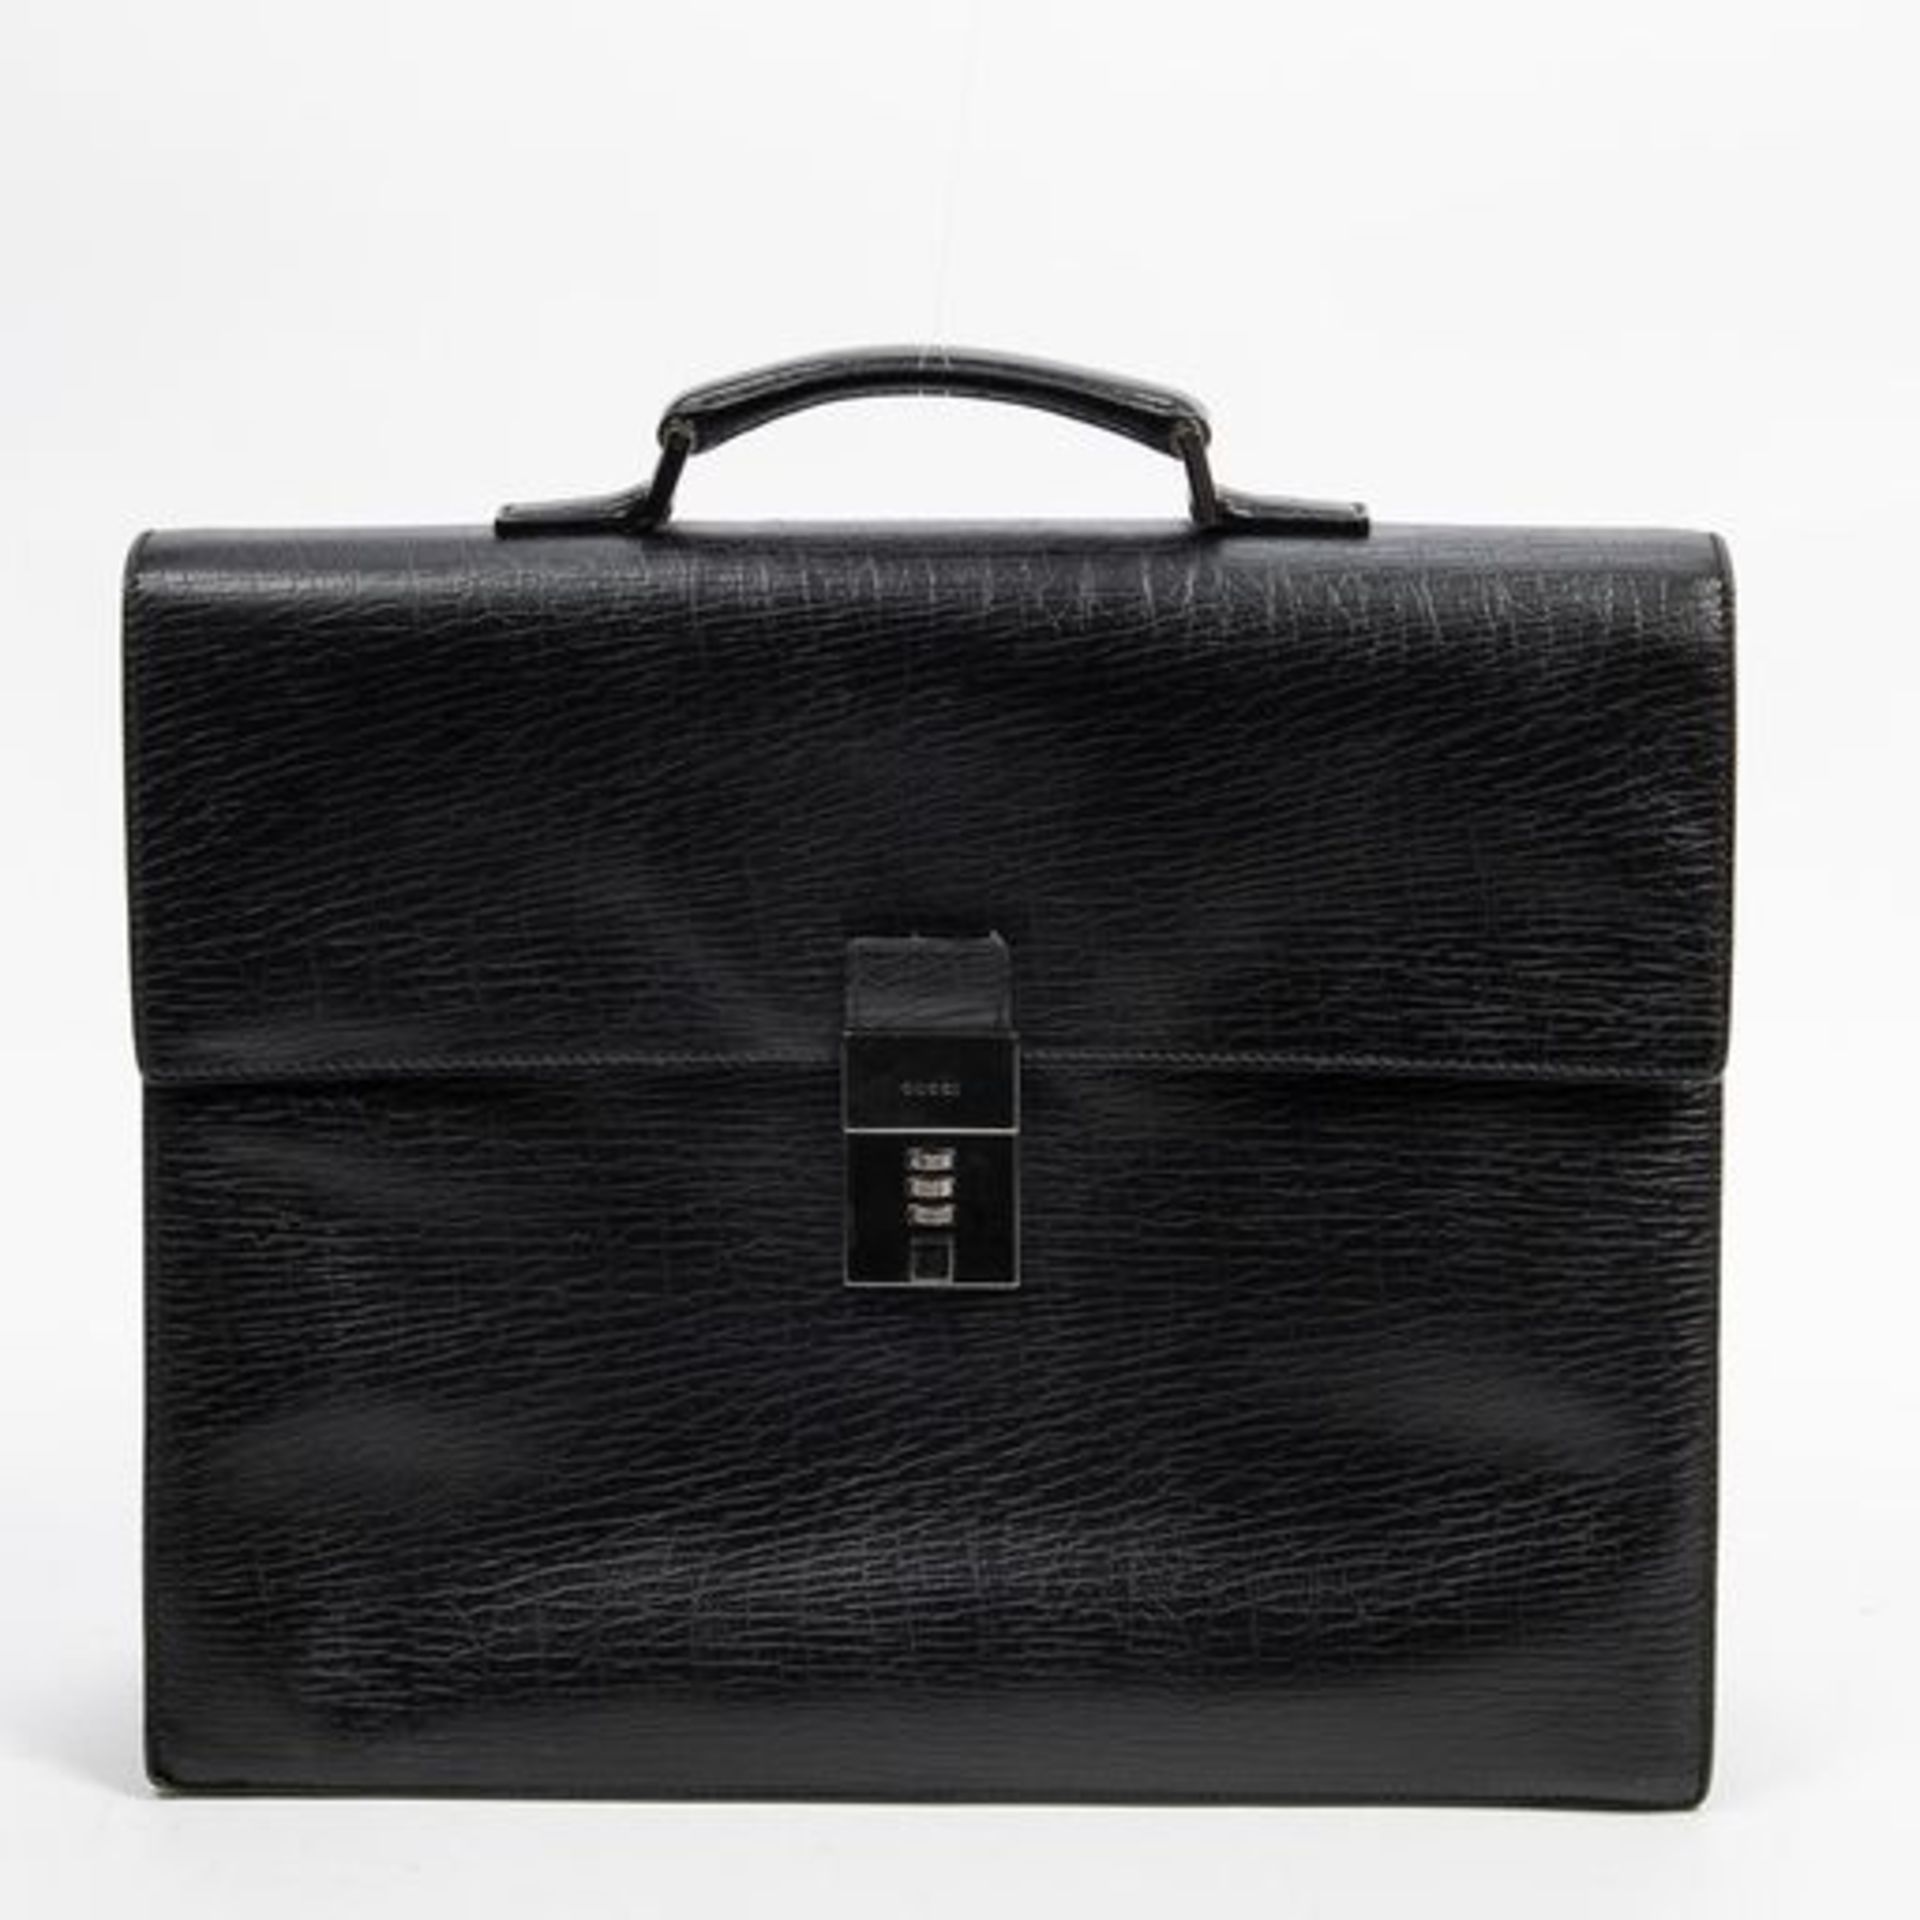 RRP £1070 Gucci Vintage Briefcase Shoulder Bag Black - AAR1391 - Grade A - (Bags Are Not On Site,